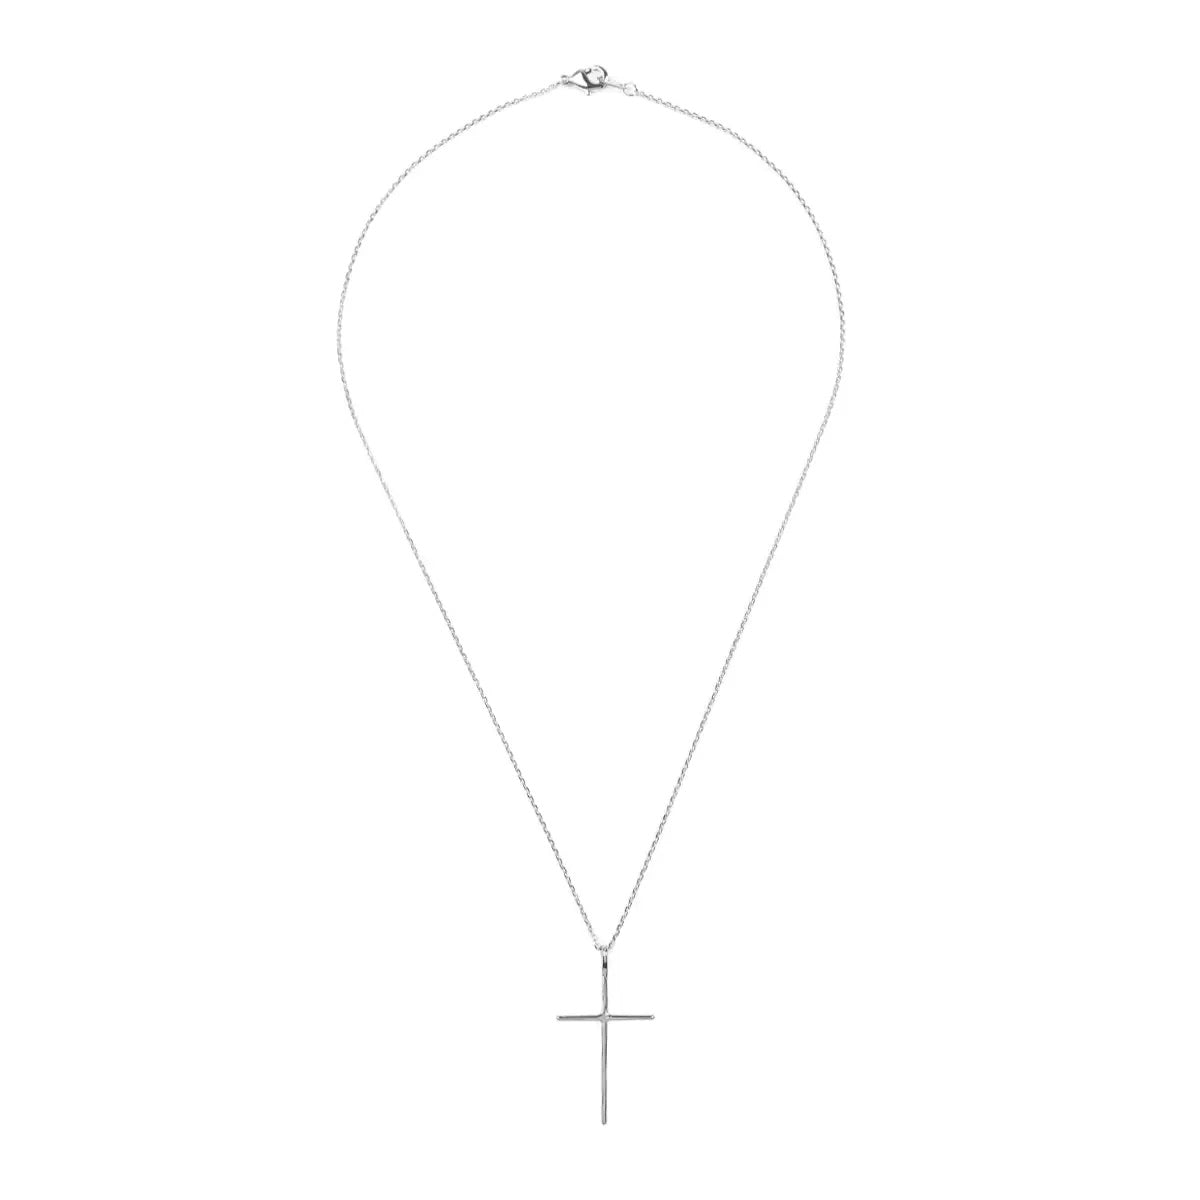 Cross Pendant Necklace - Silver